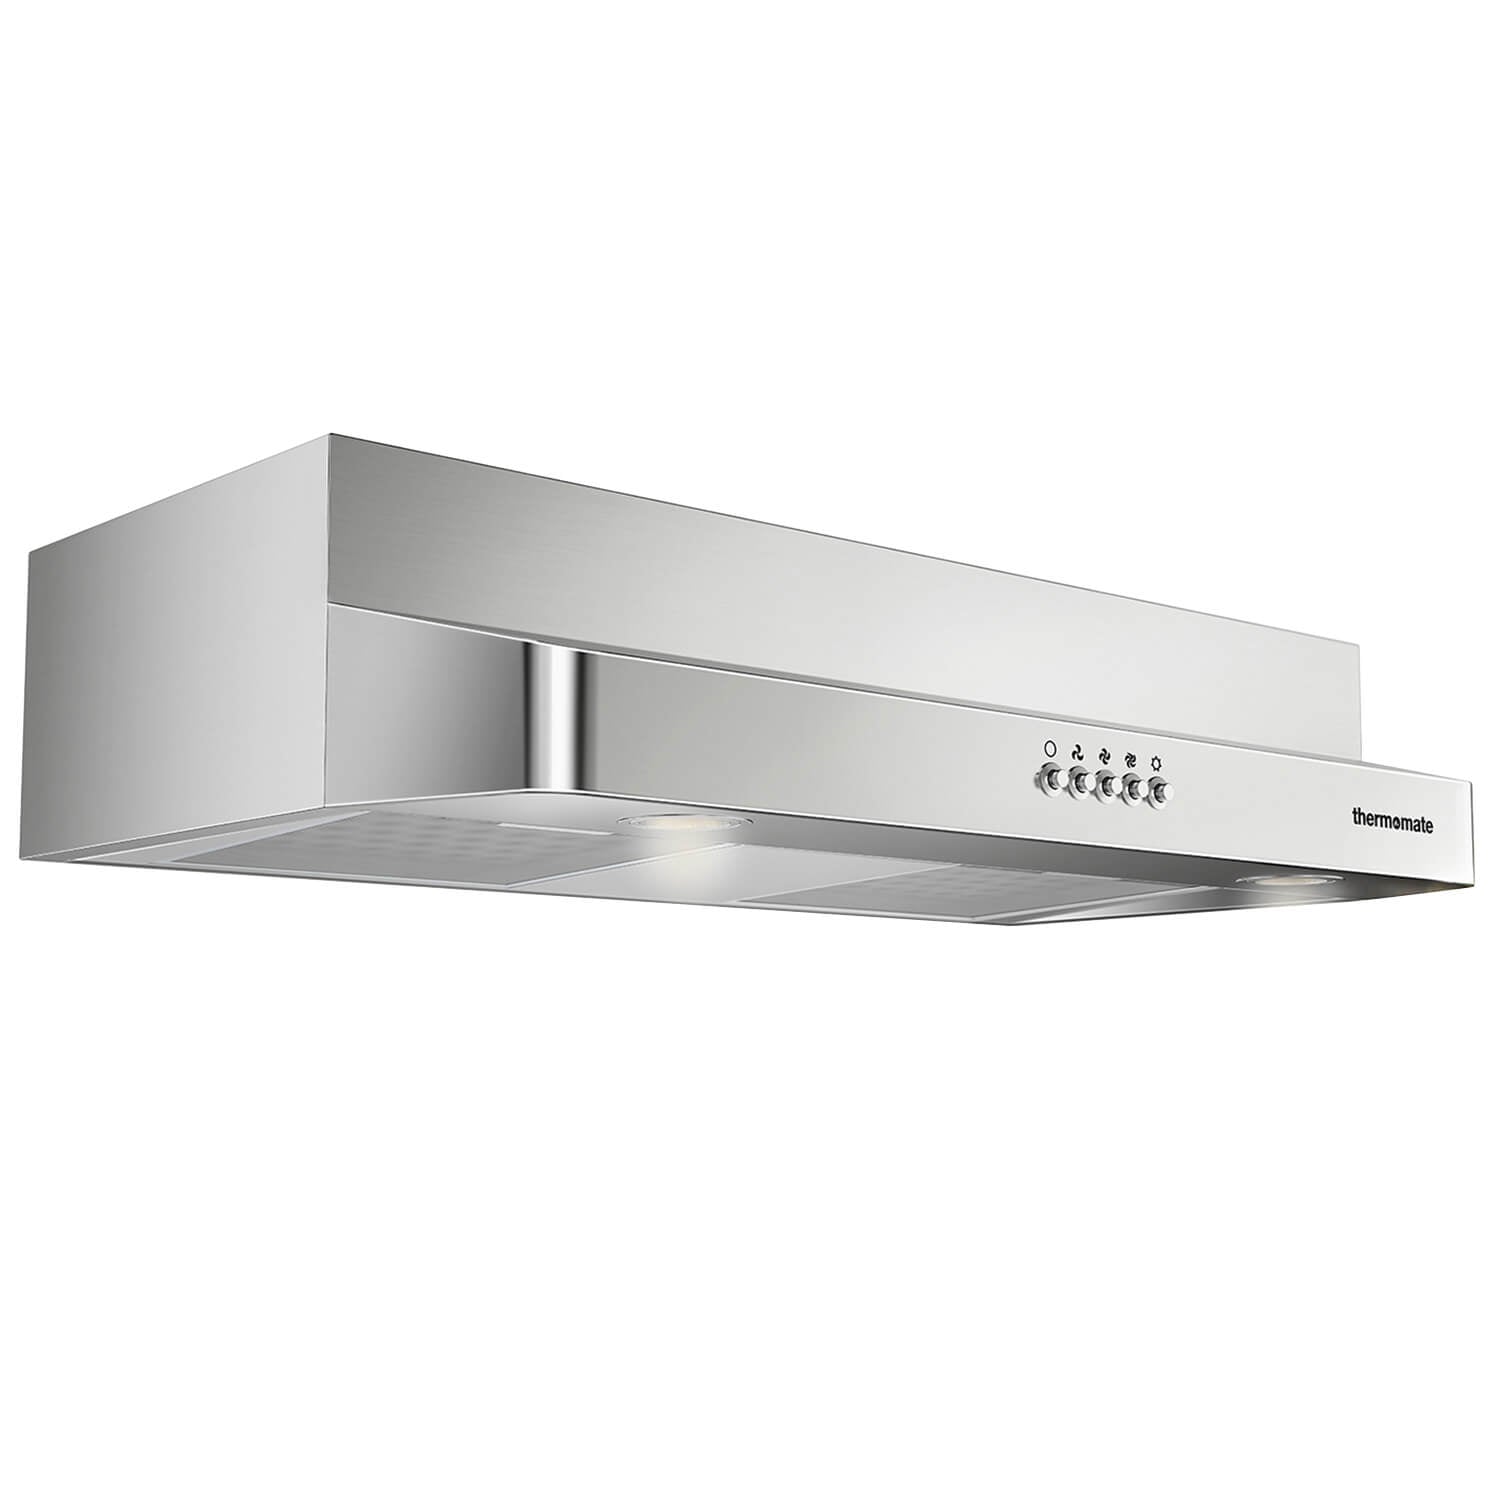 30 inch Under Cabinet Range Hood 230CFM Stainless Steel 3 Speed Kitchen  Vent LED